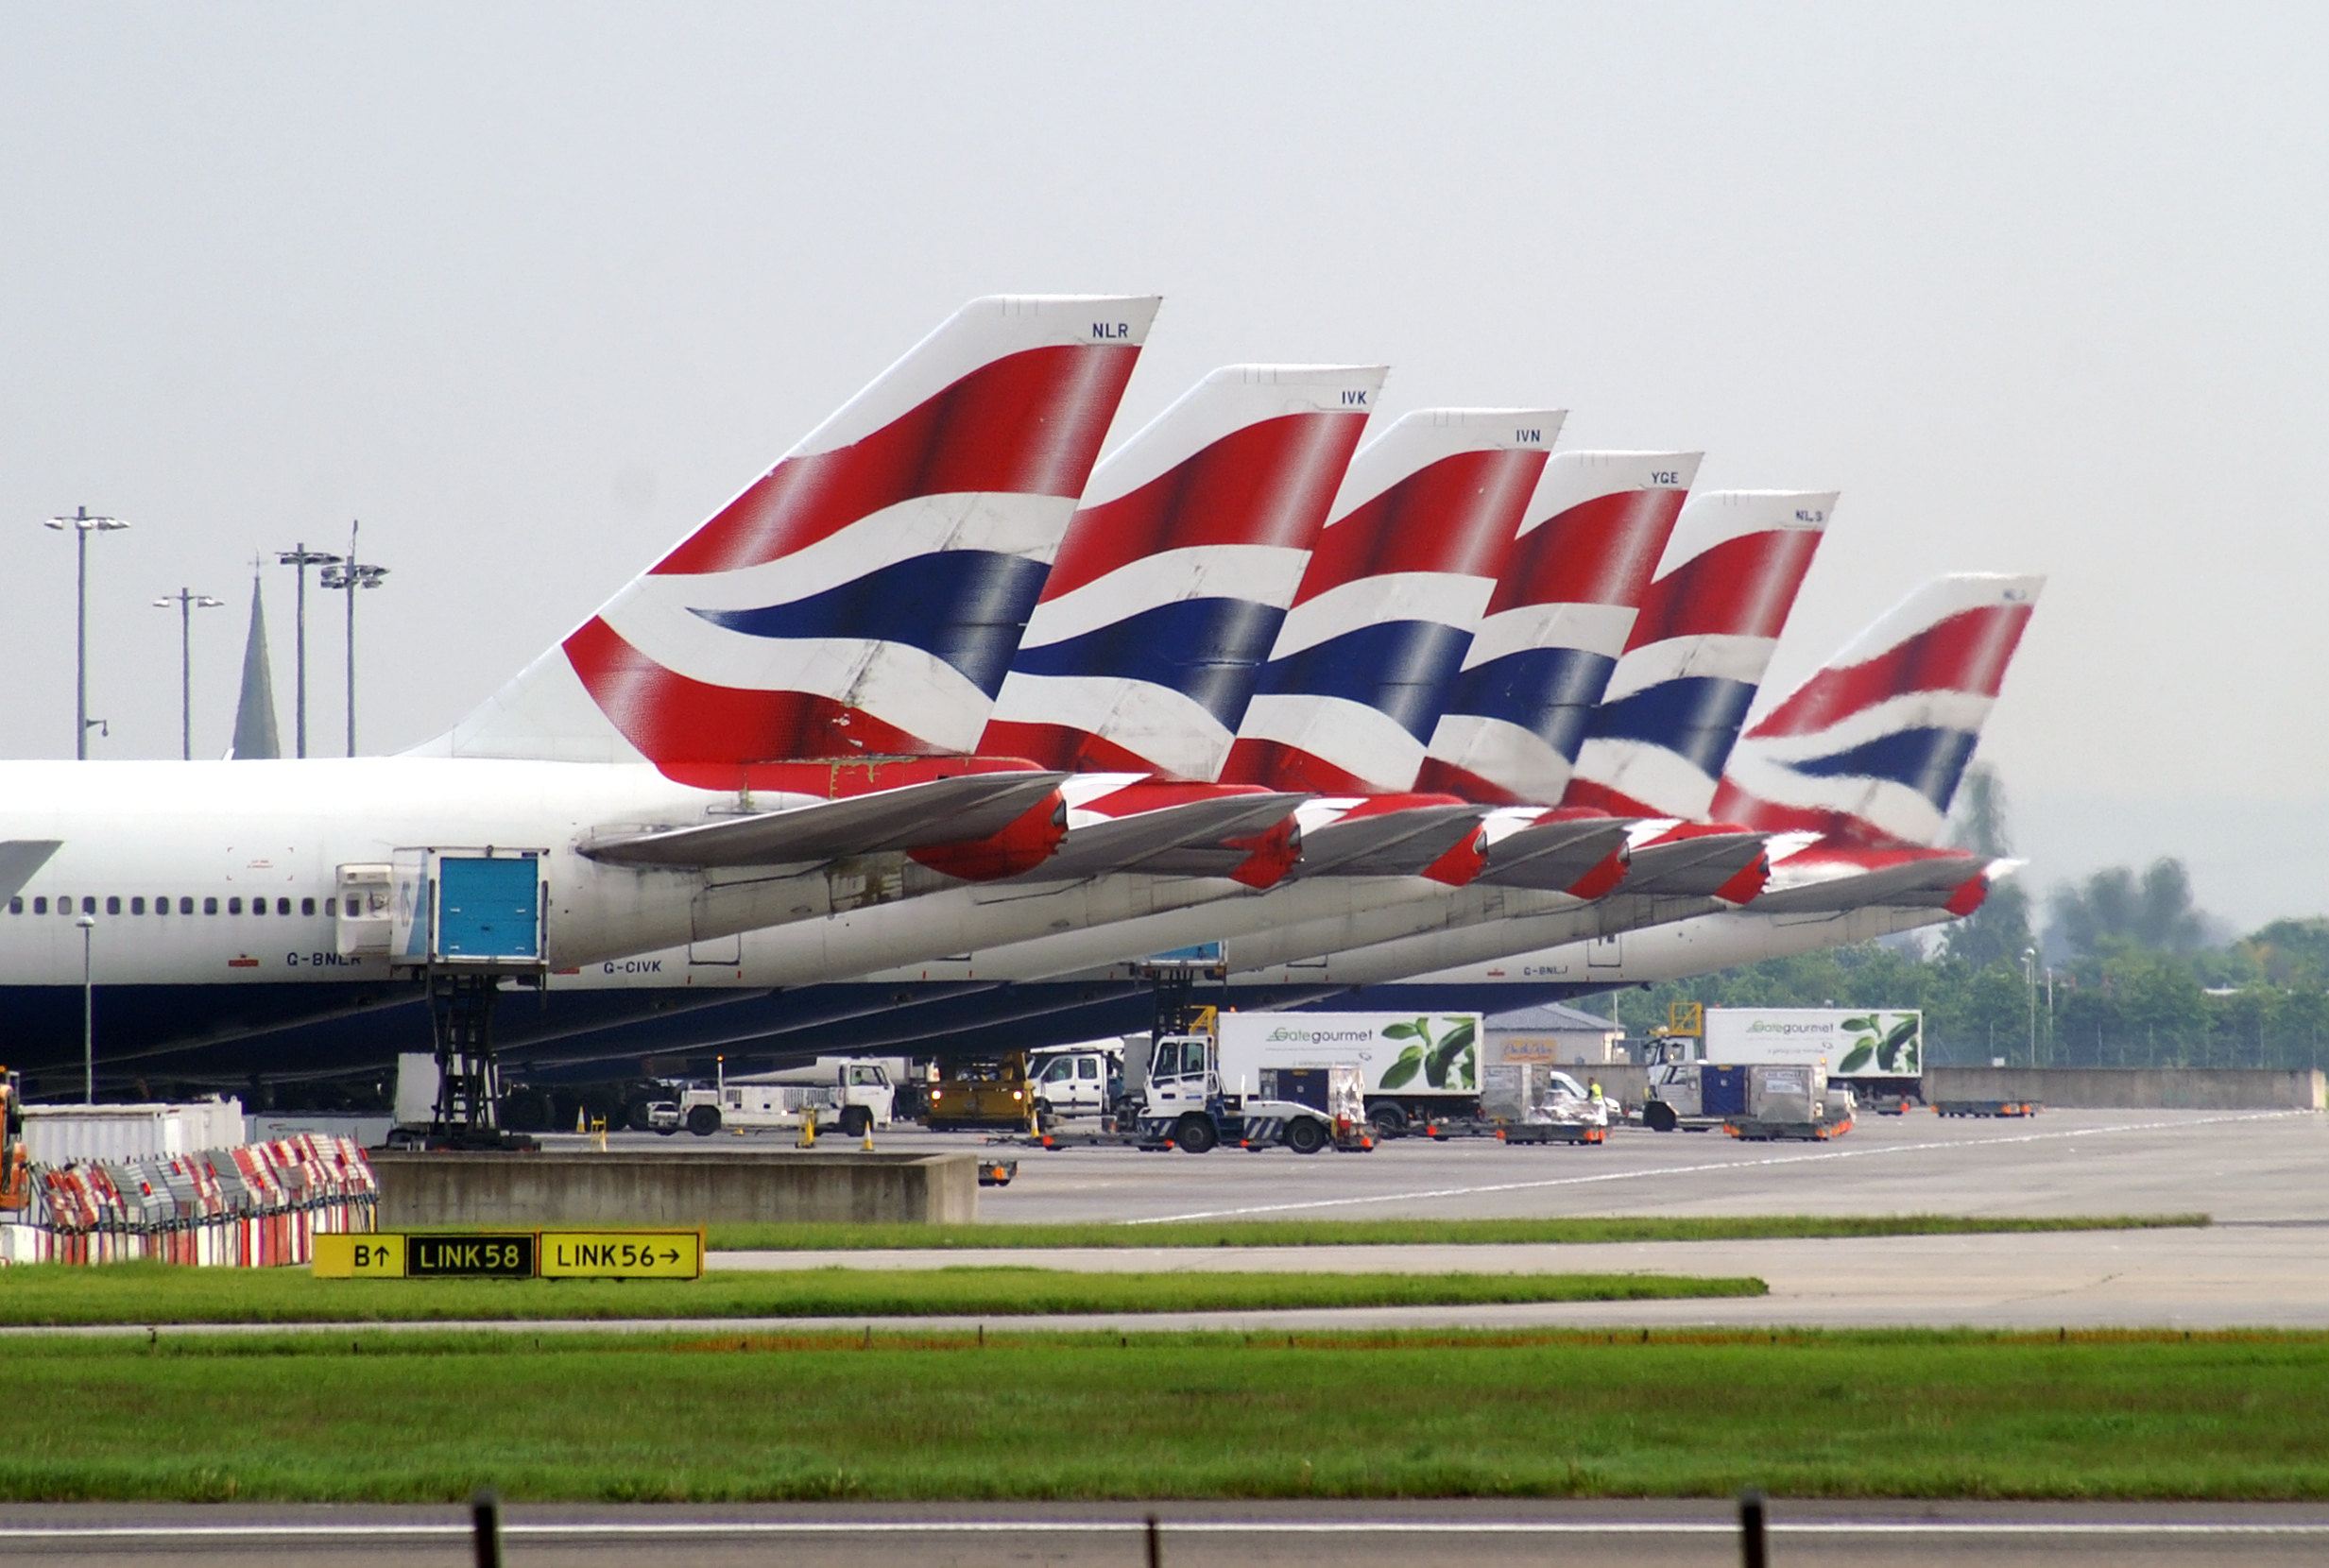 A fleet of British airways plans on the apron